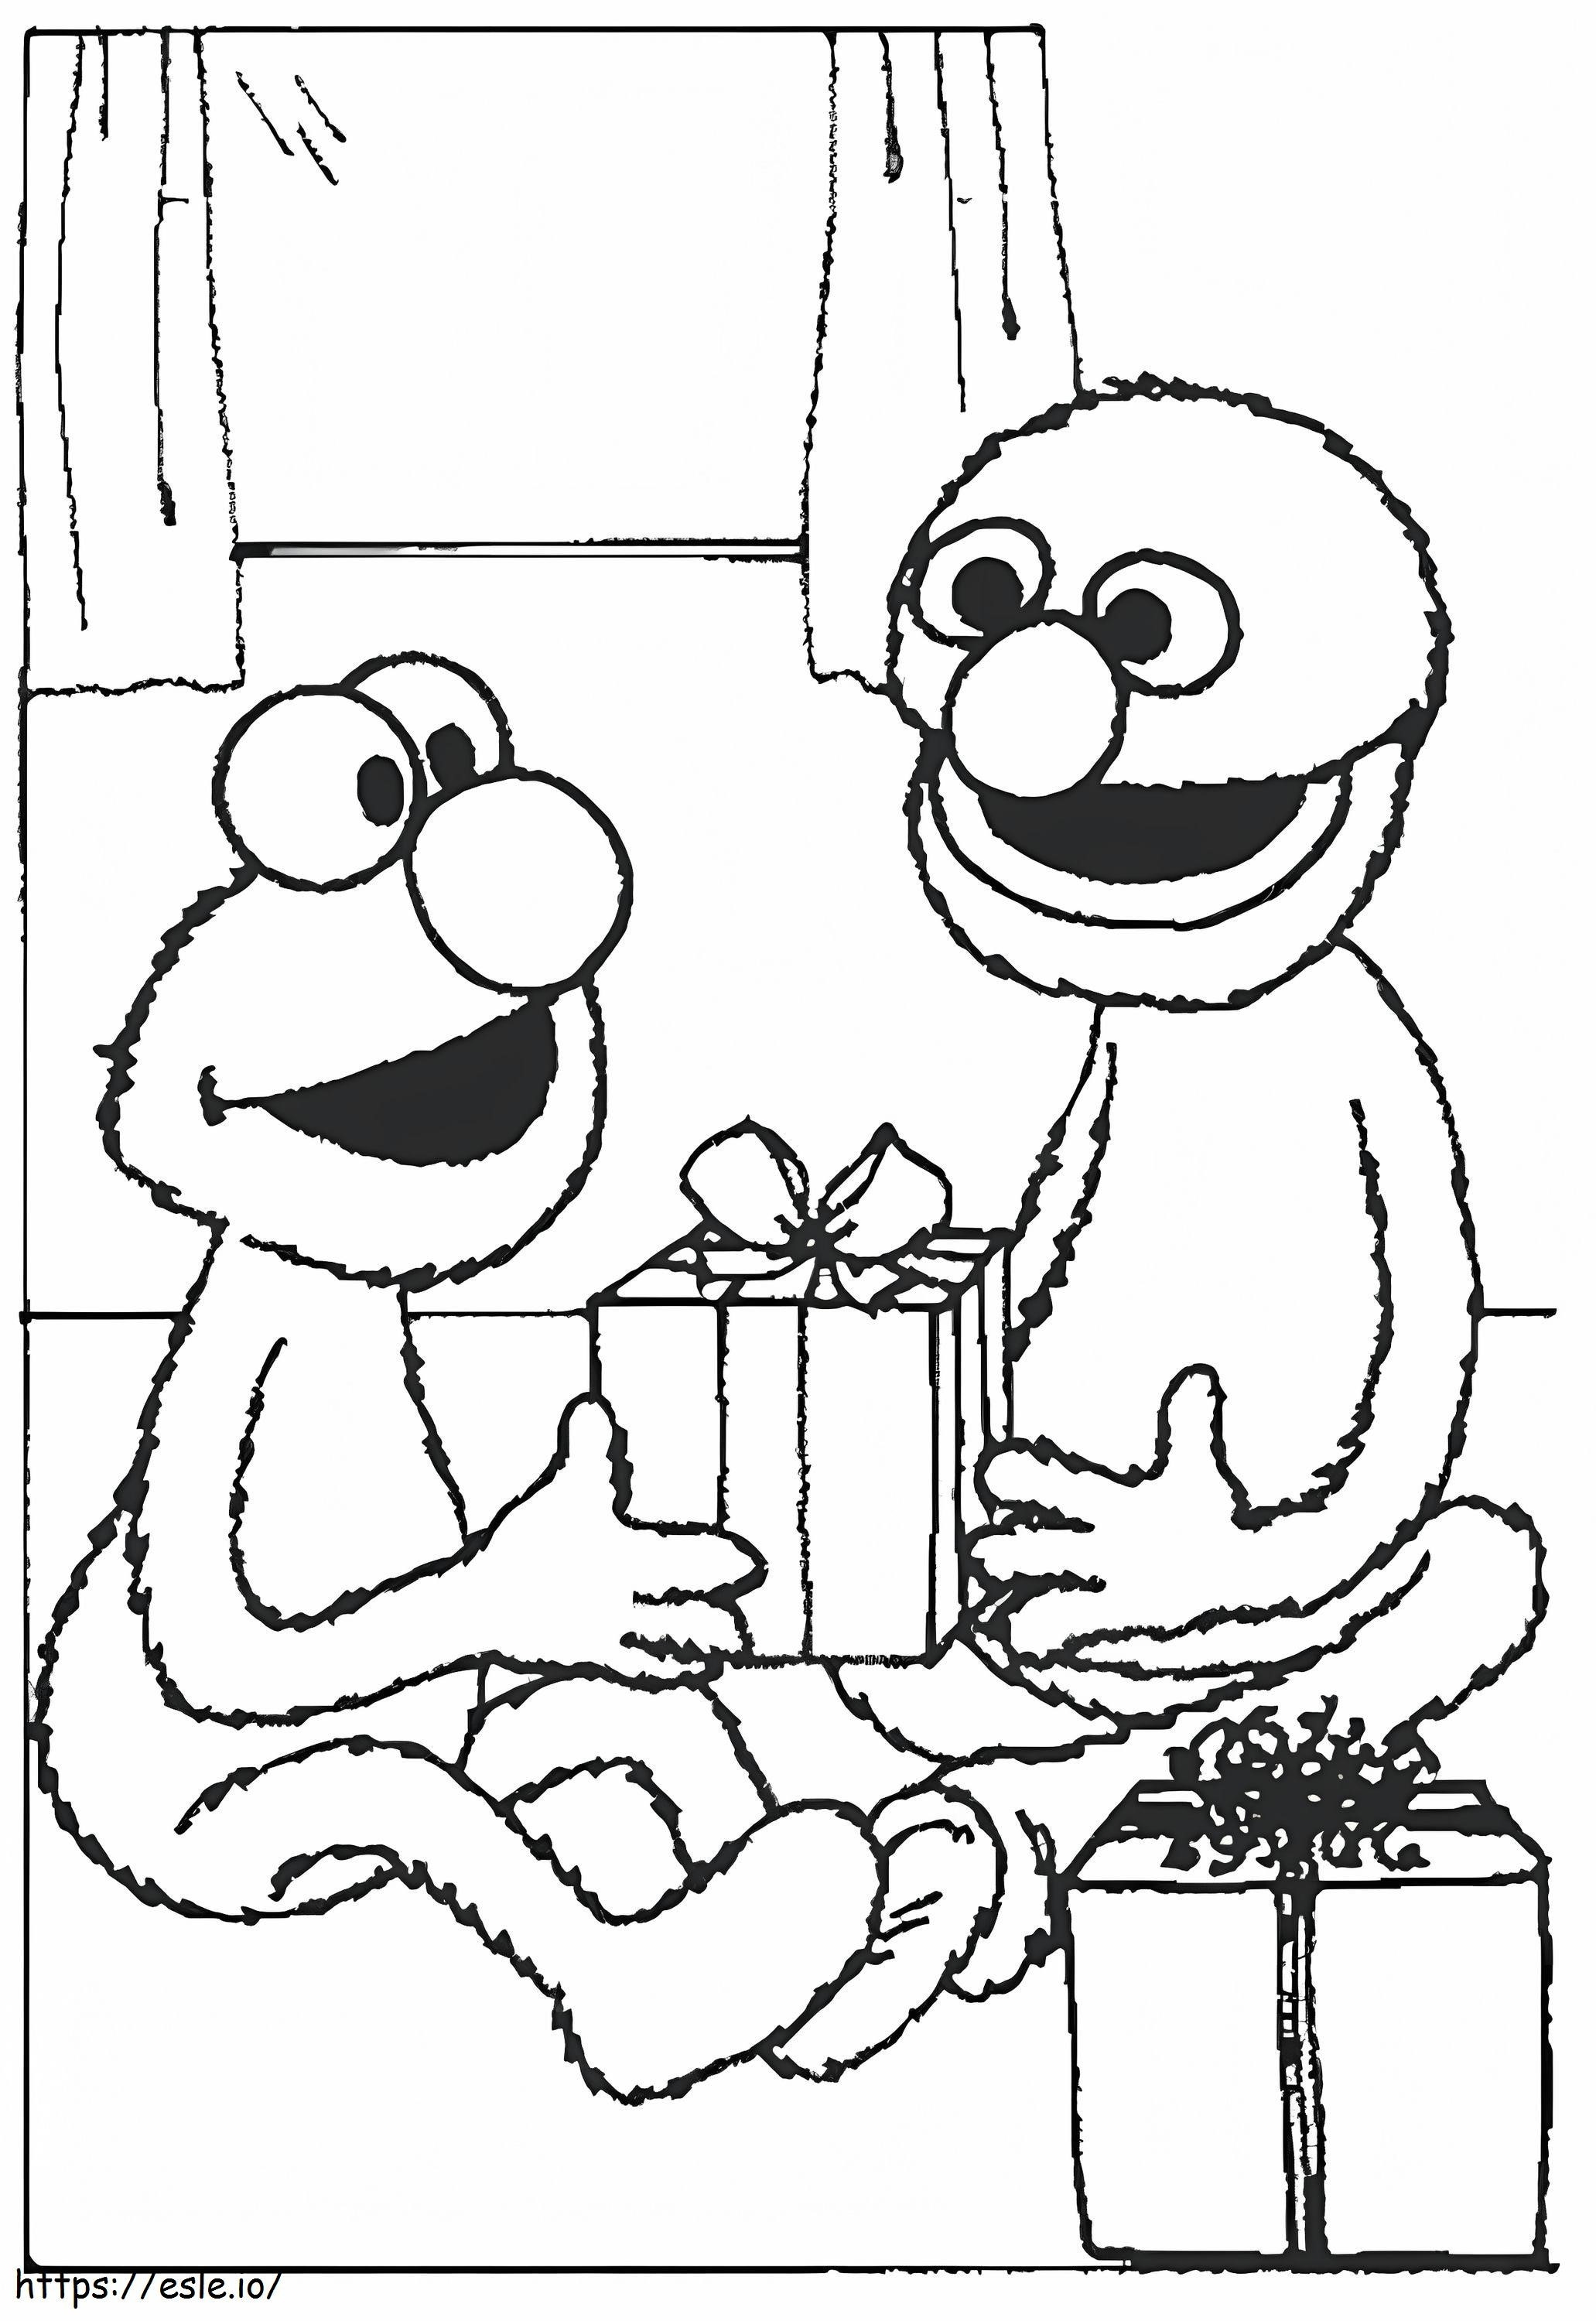 Coloriage Elmo et Grover à imprimer dessin